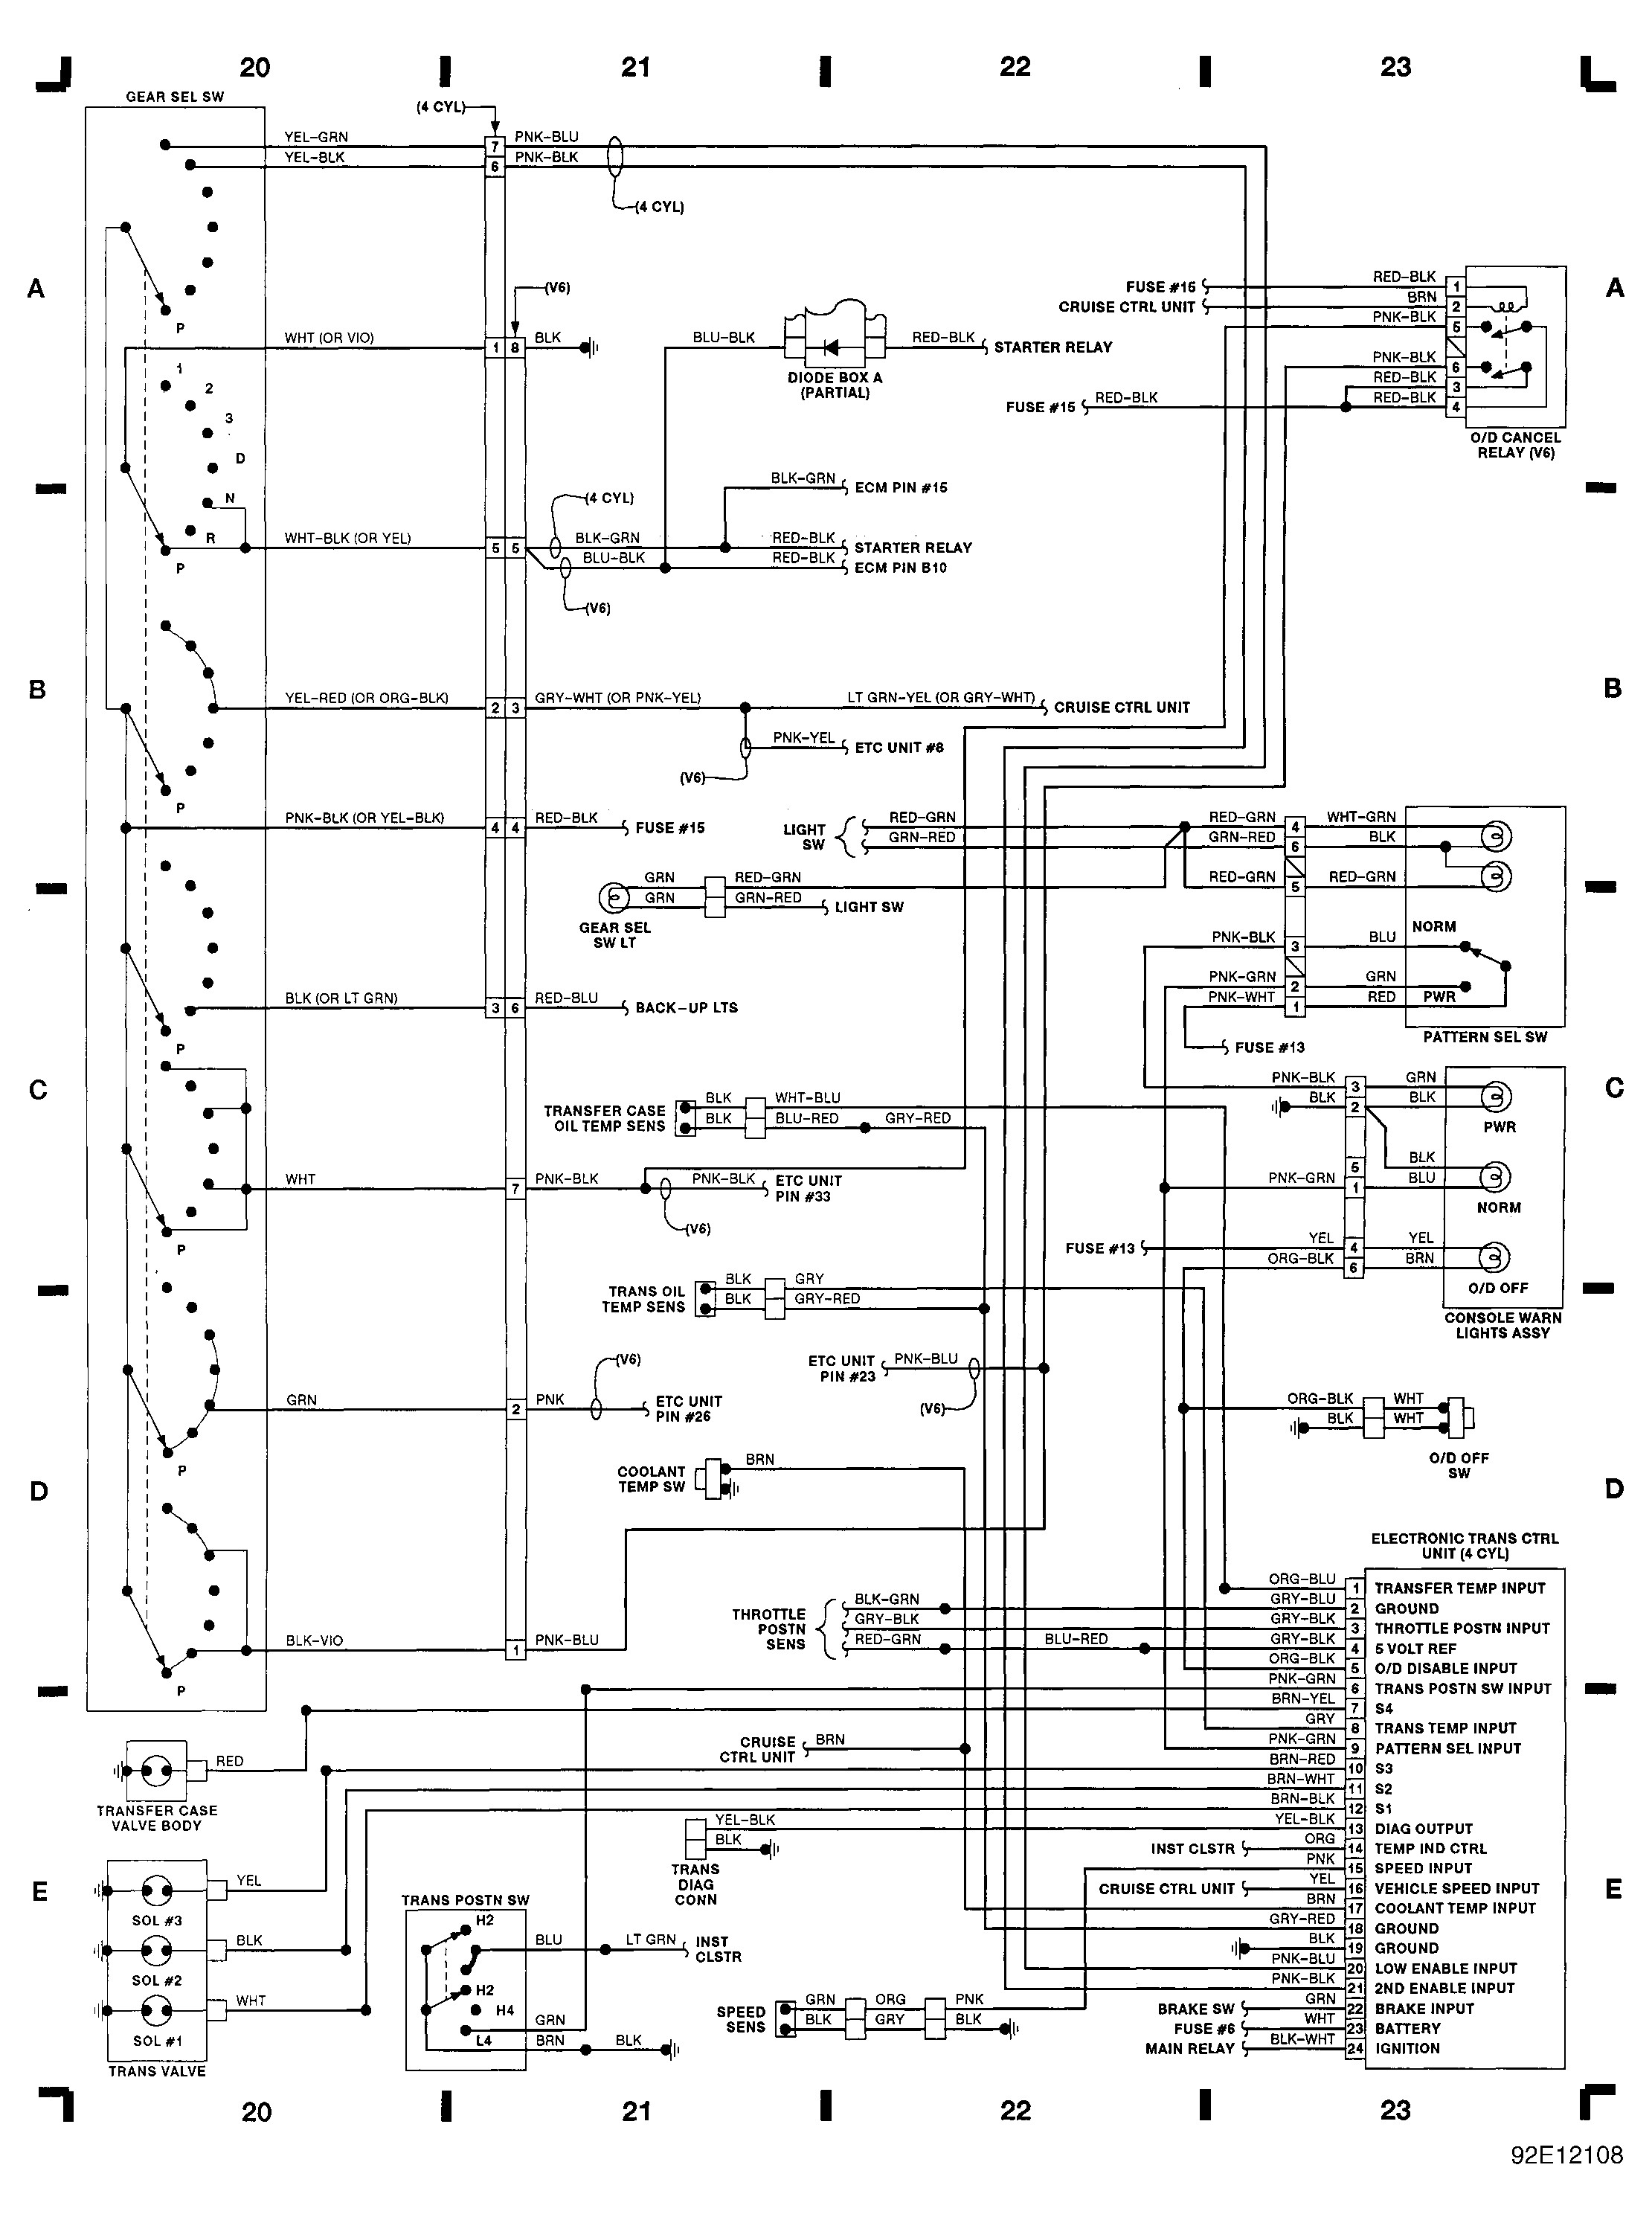 Isuzu Rodeo Engine Diagram 91awd to Transmission Wiring Diagram B2network